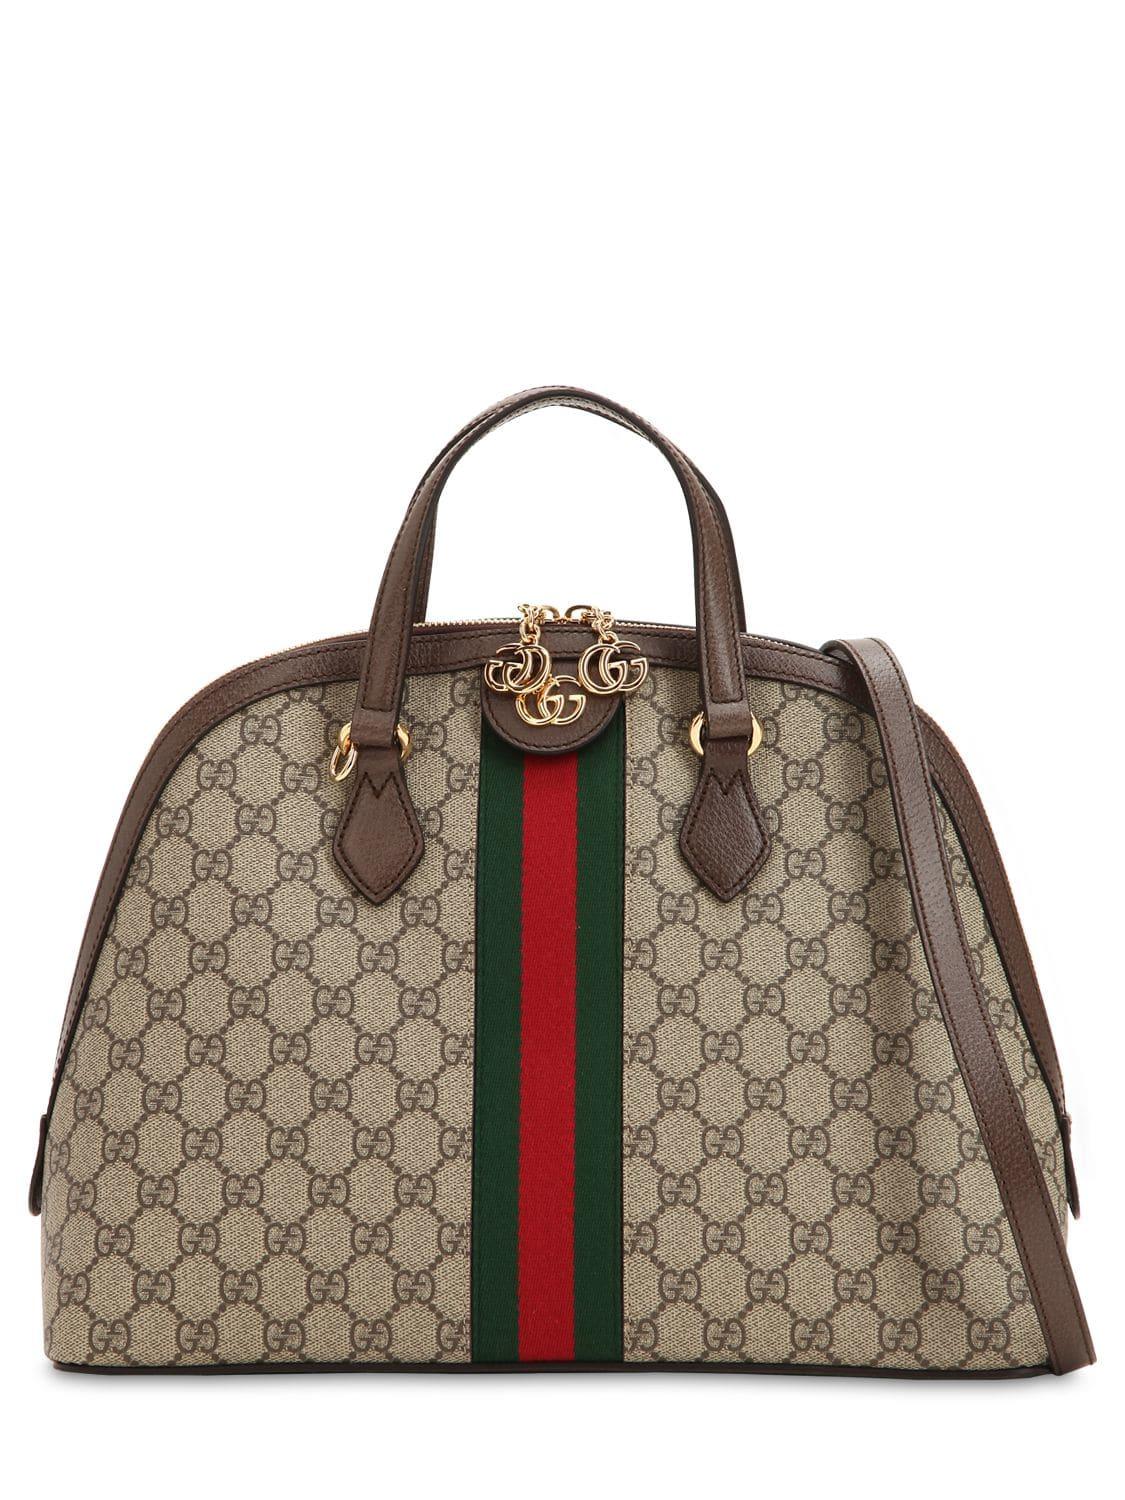 Gucci Ophidia GG Medium Top Handle Bag in Brown | Lyst Australia